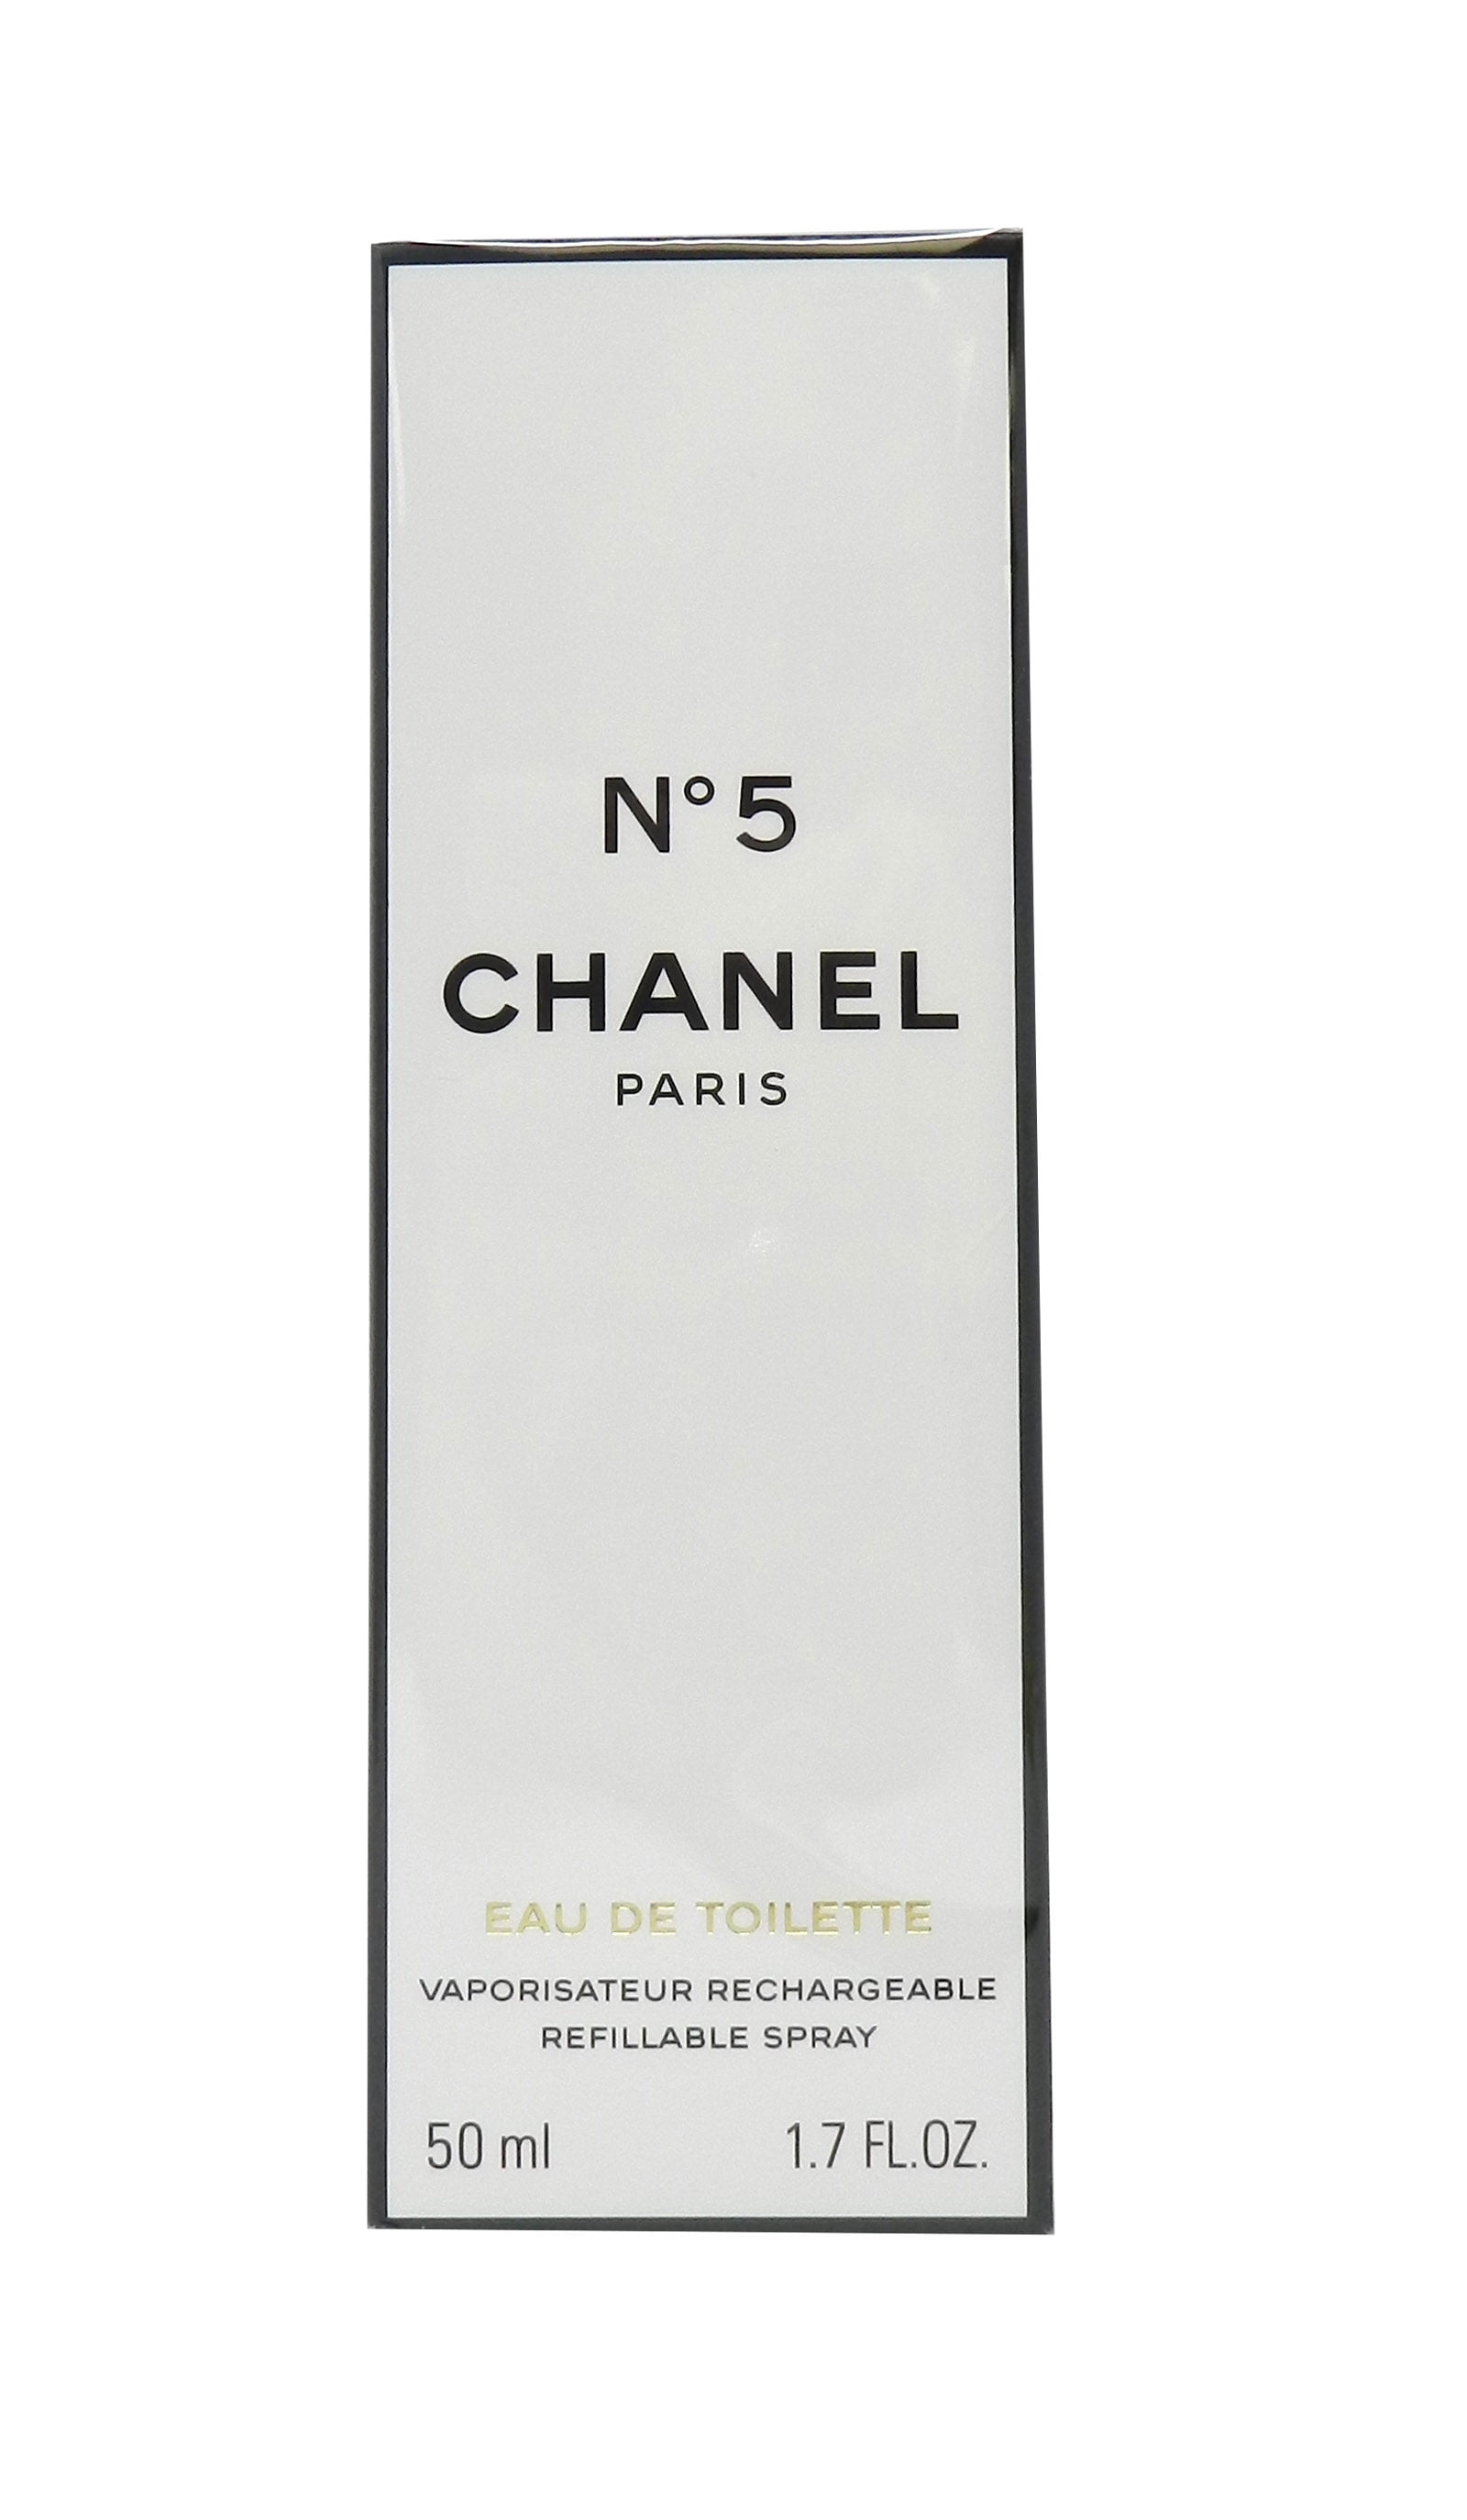 Chanel No.5 Eau de Parfum Refill